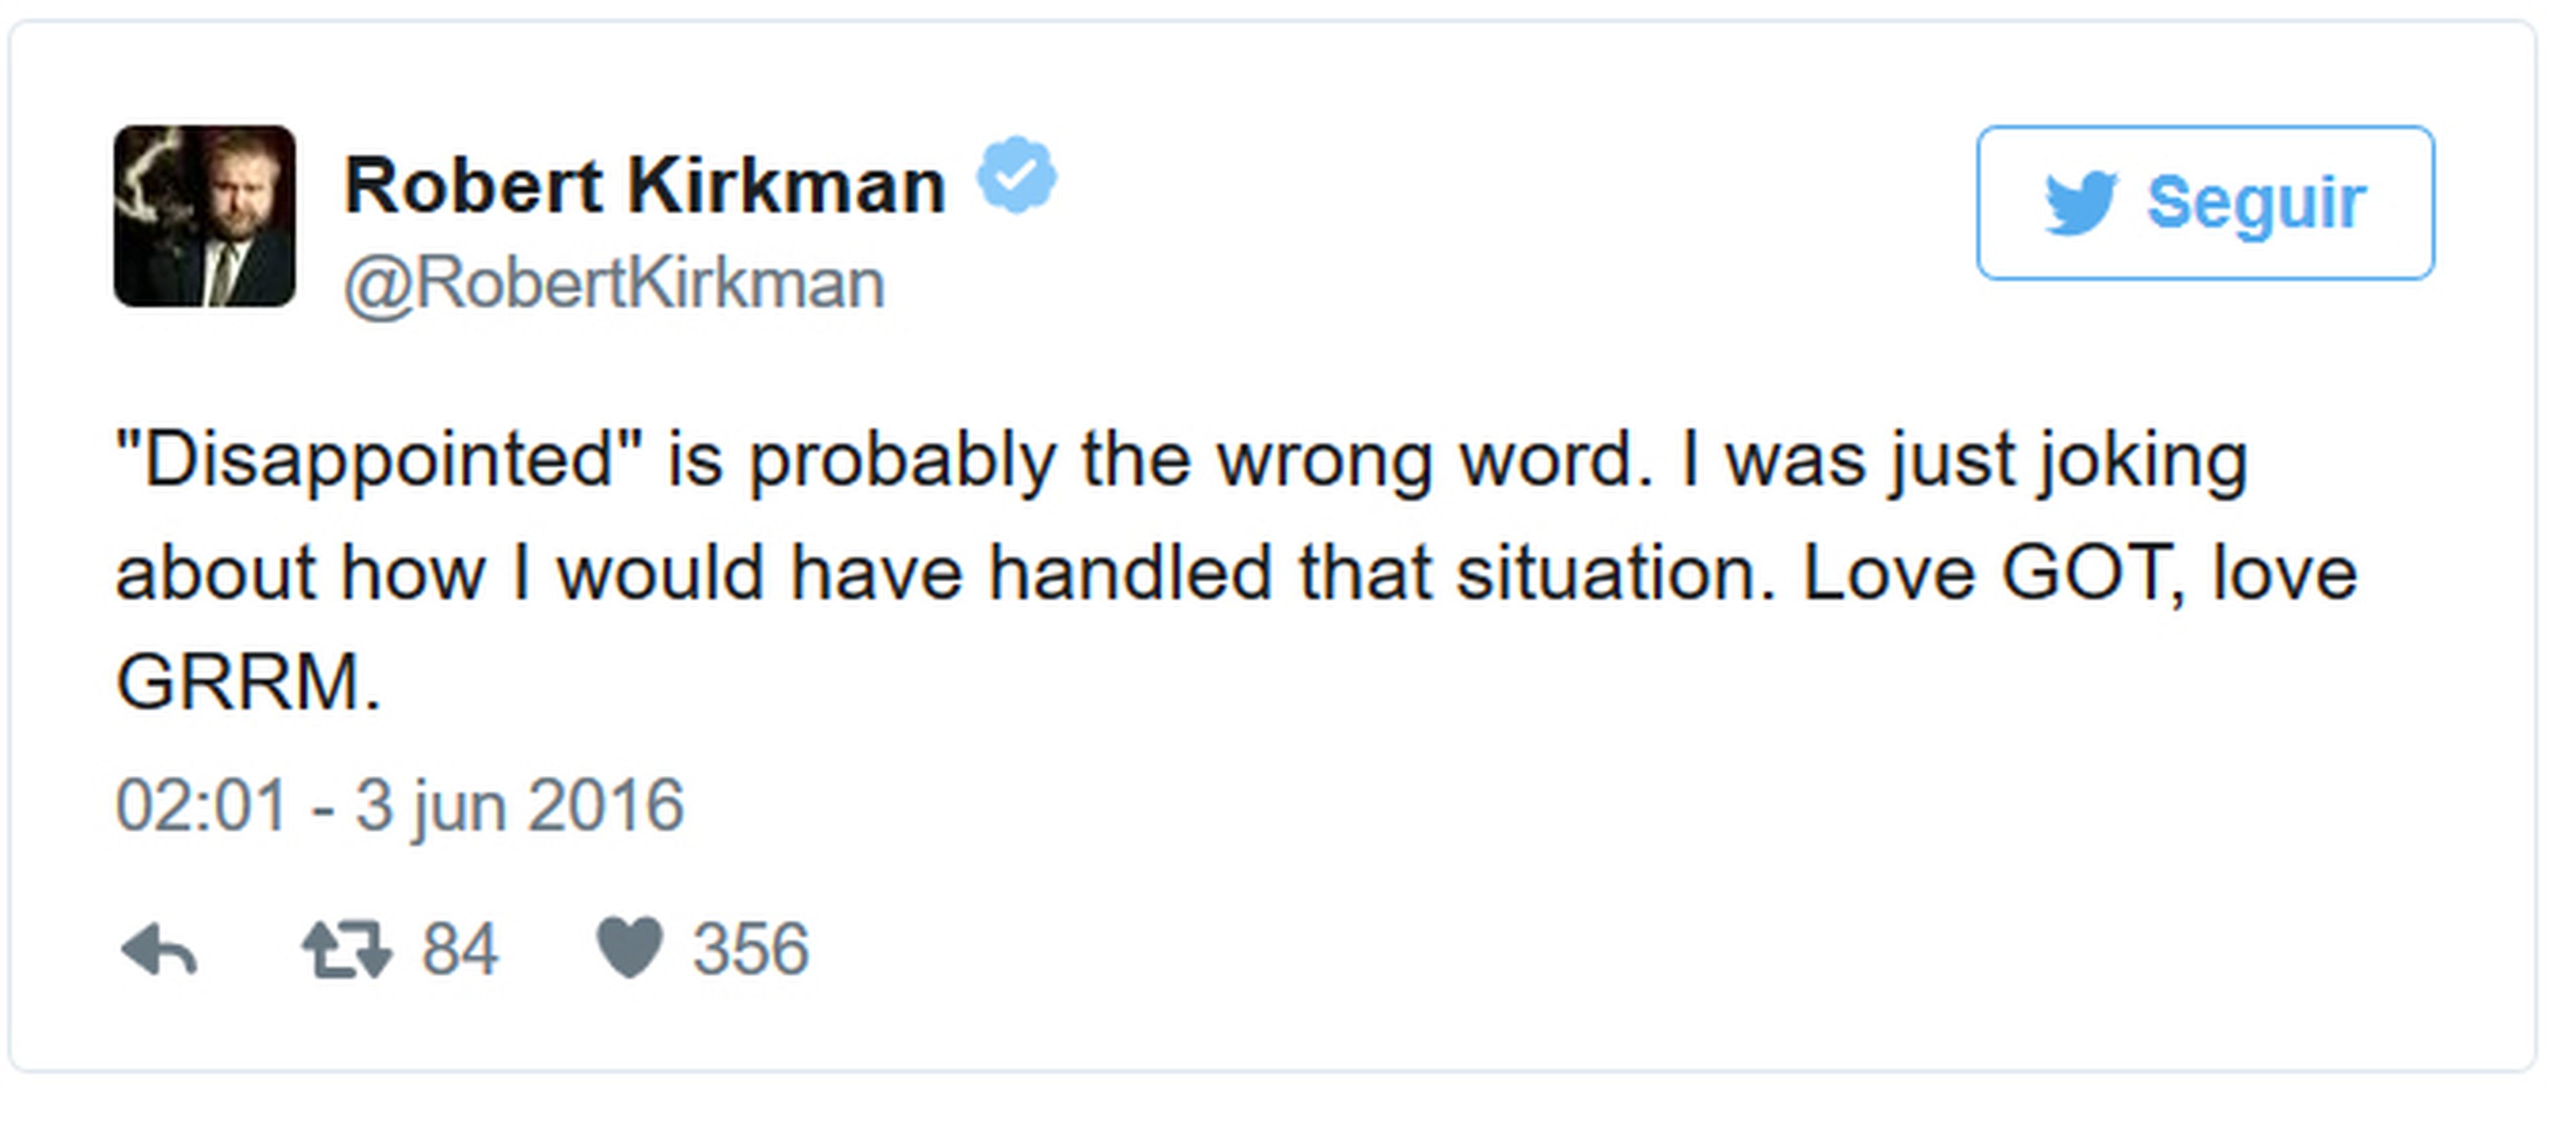 Robert Kirkman (The Walking Dead) rectifica sus críticas a George R.R. Martin